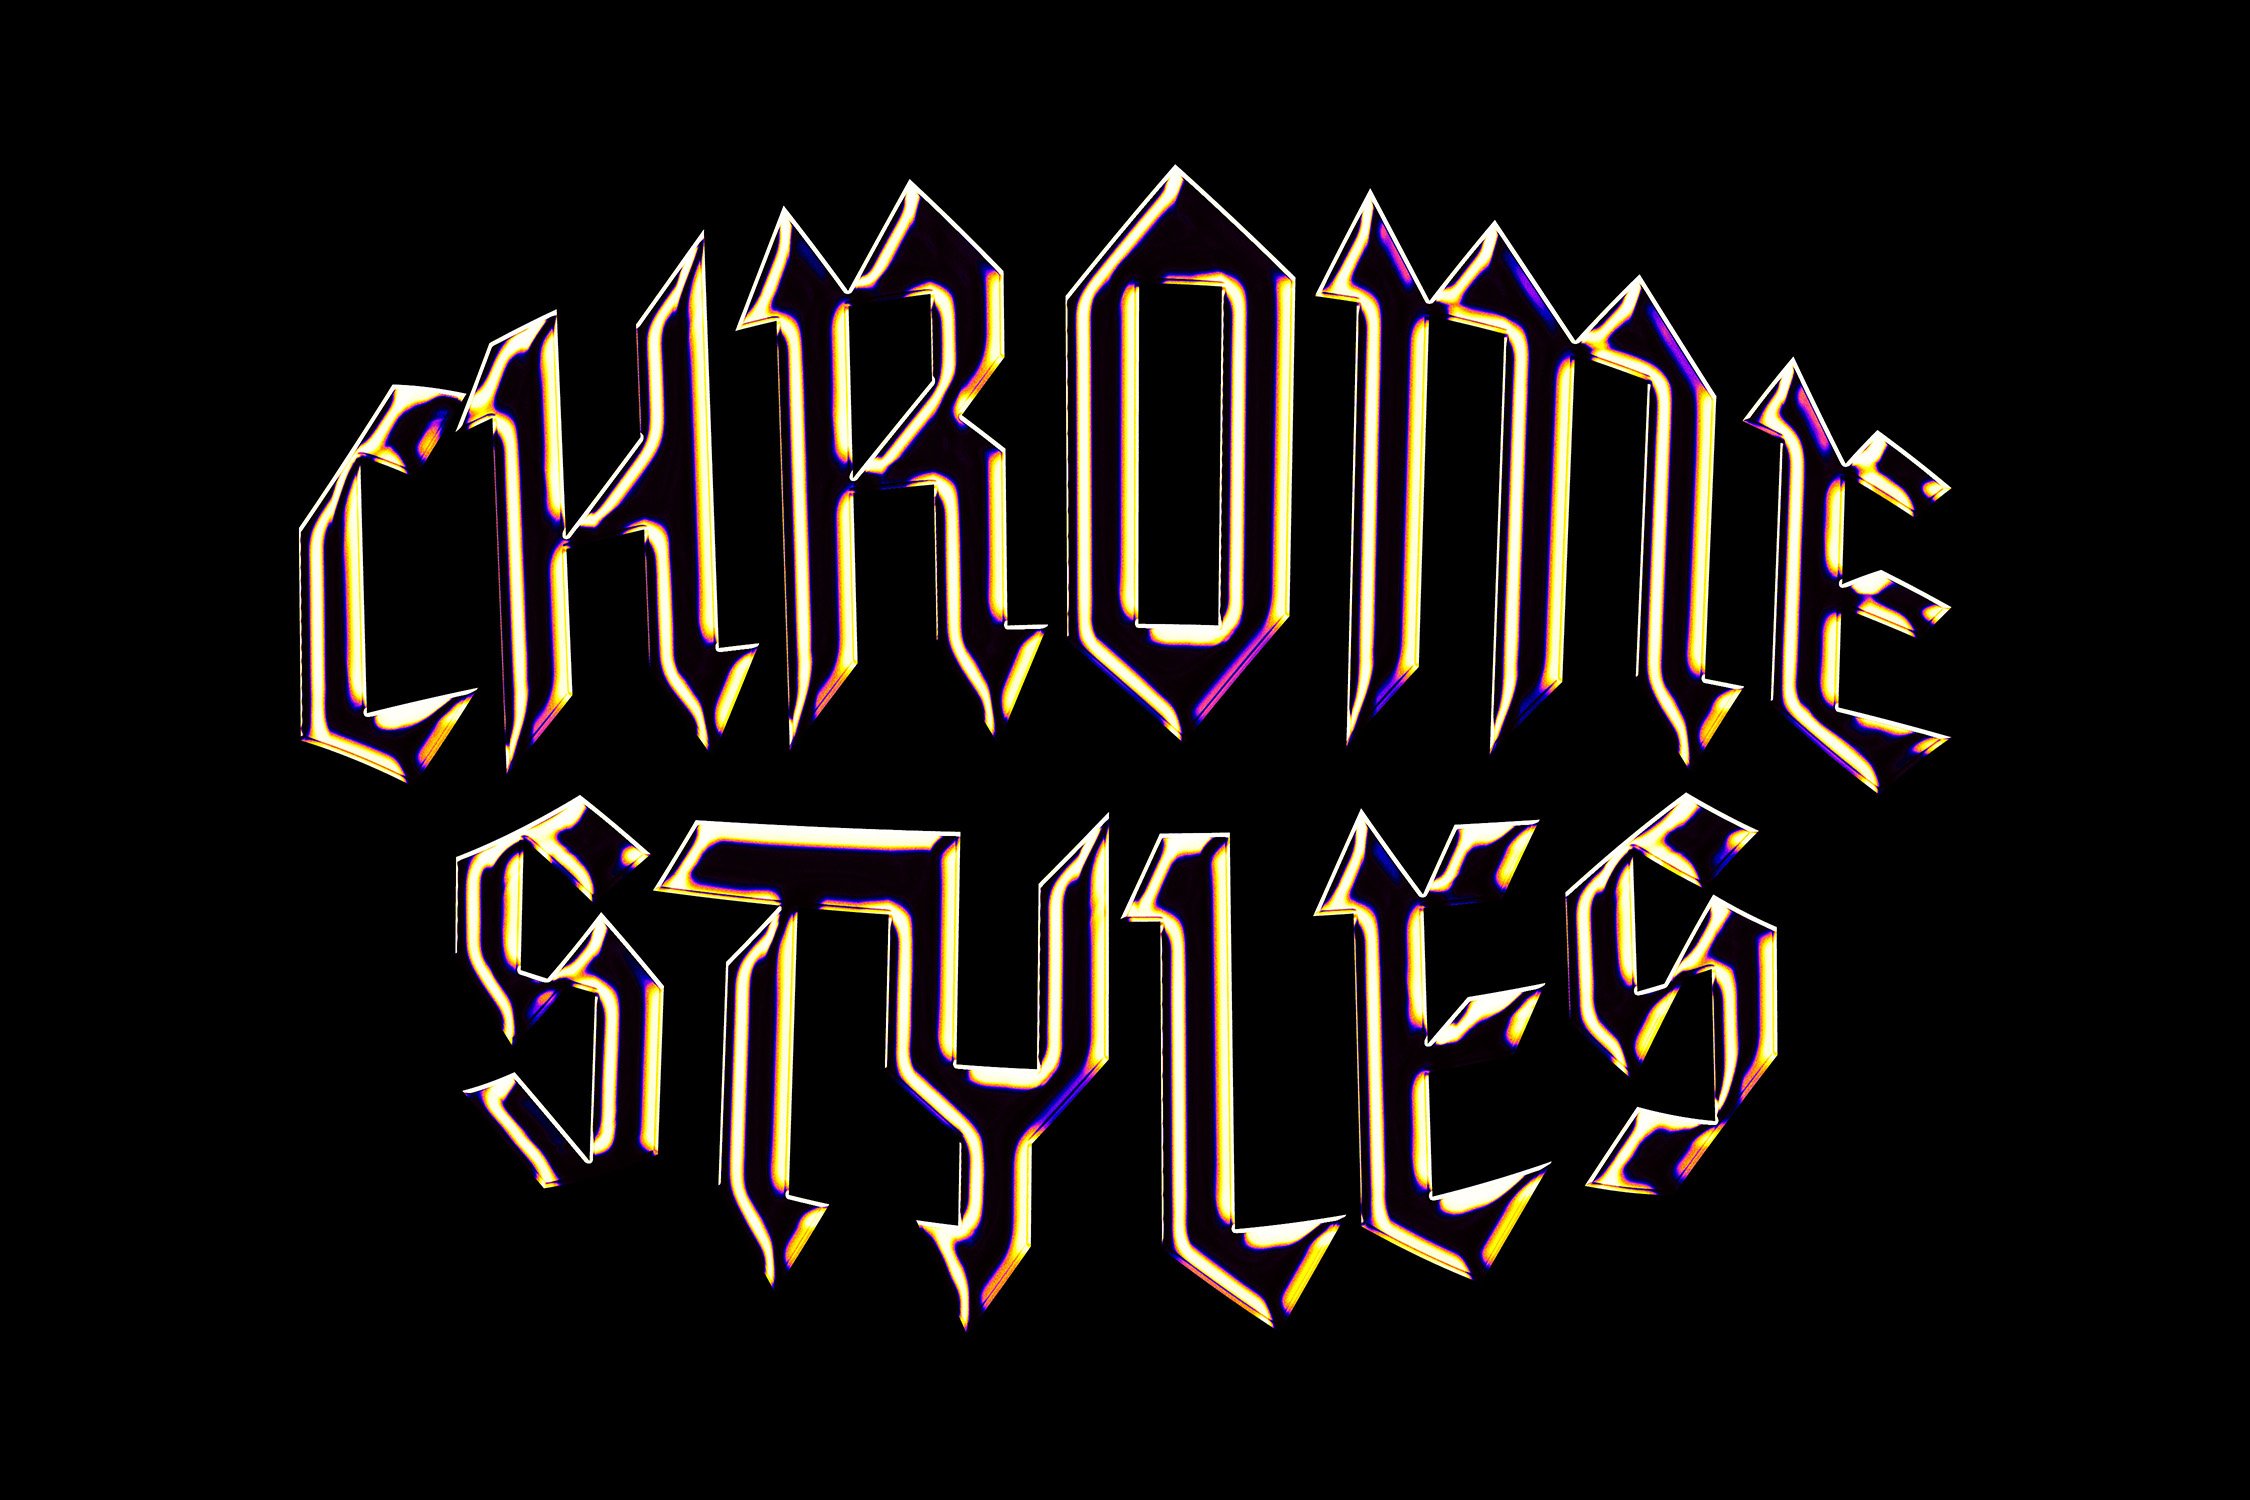 galactic chrome text styles 06 536